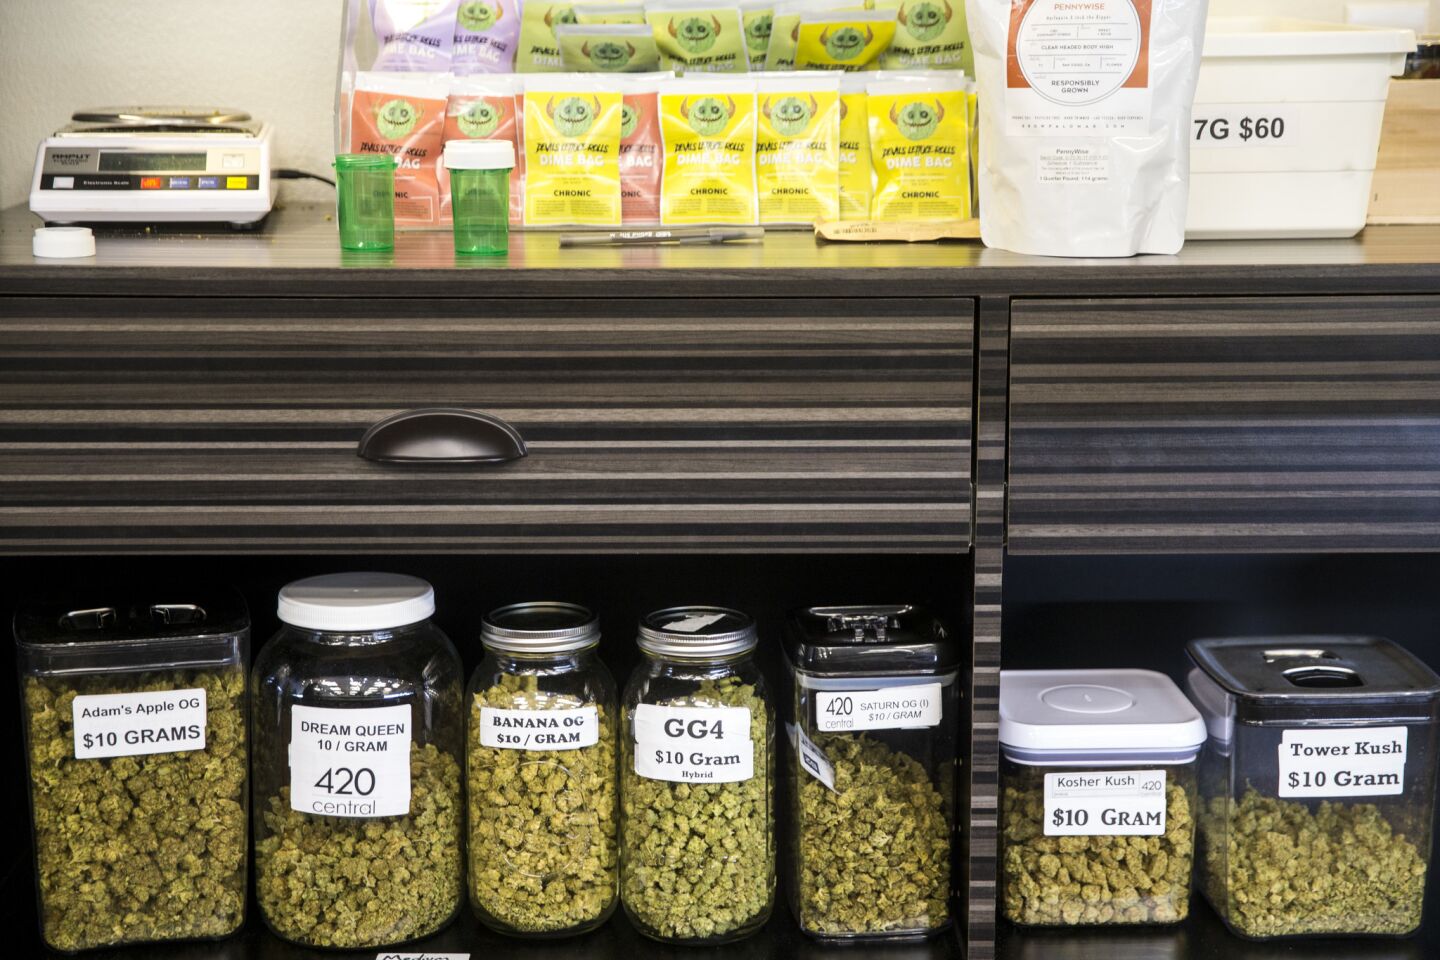 Different strains of marijuana at 420 Central in Santa Ana.